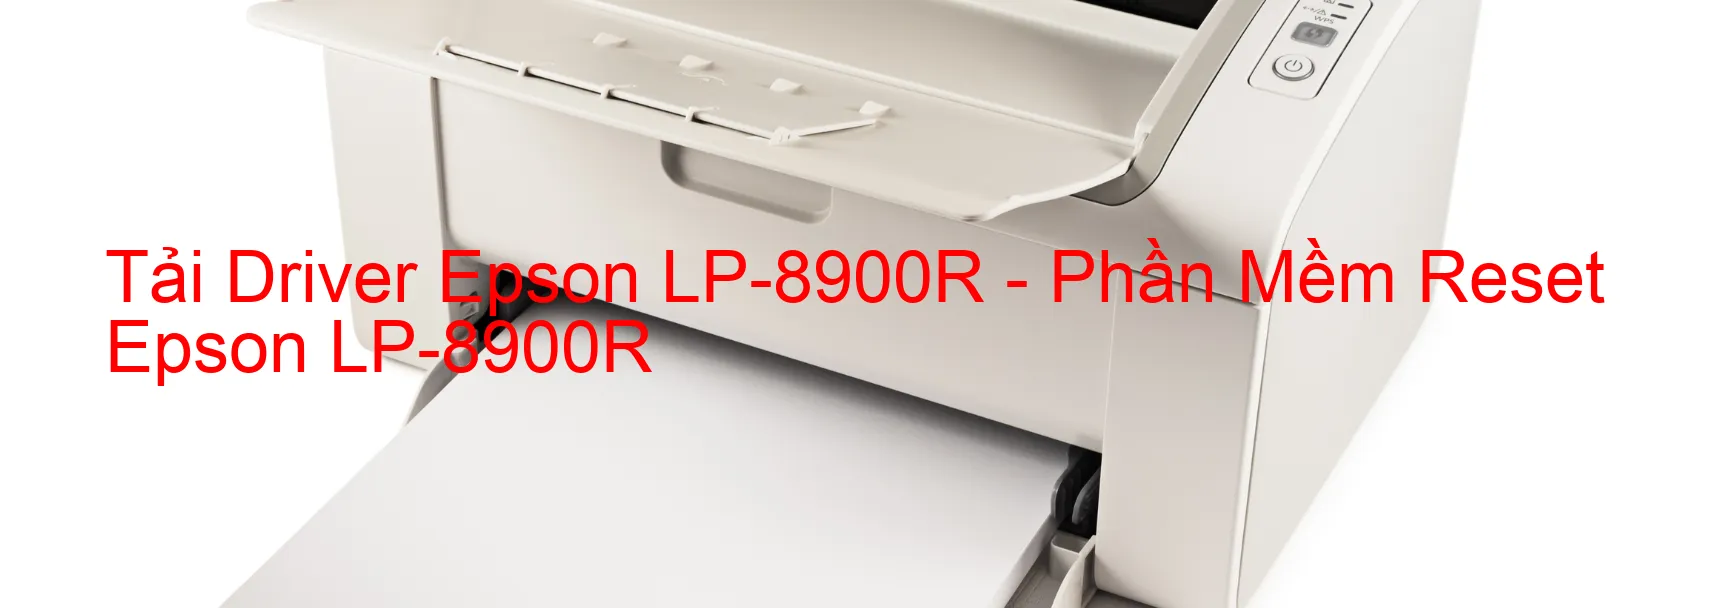 Driver Epson LP-8900R, Phần Mềm Reset Epson LP-8900R